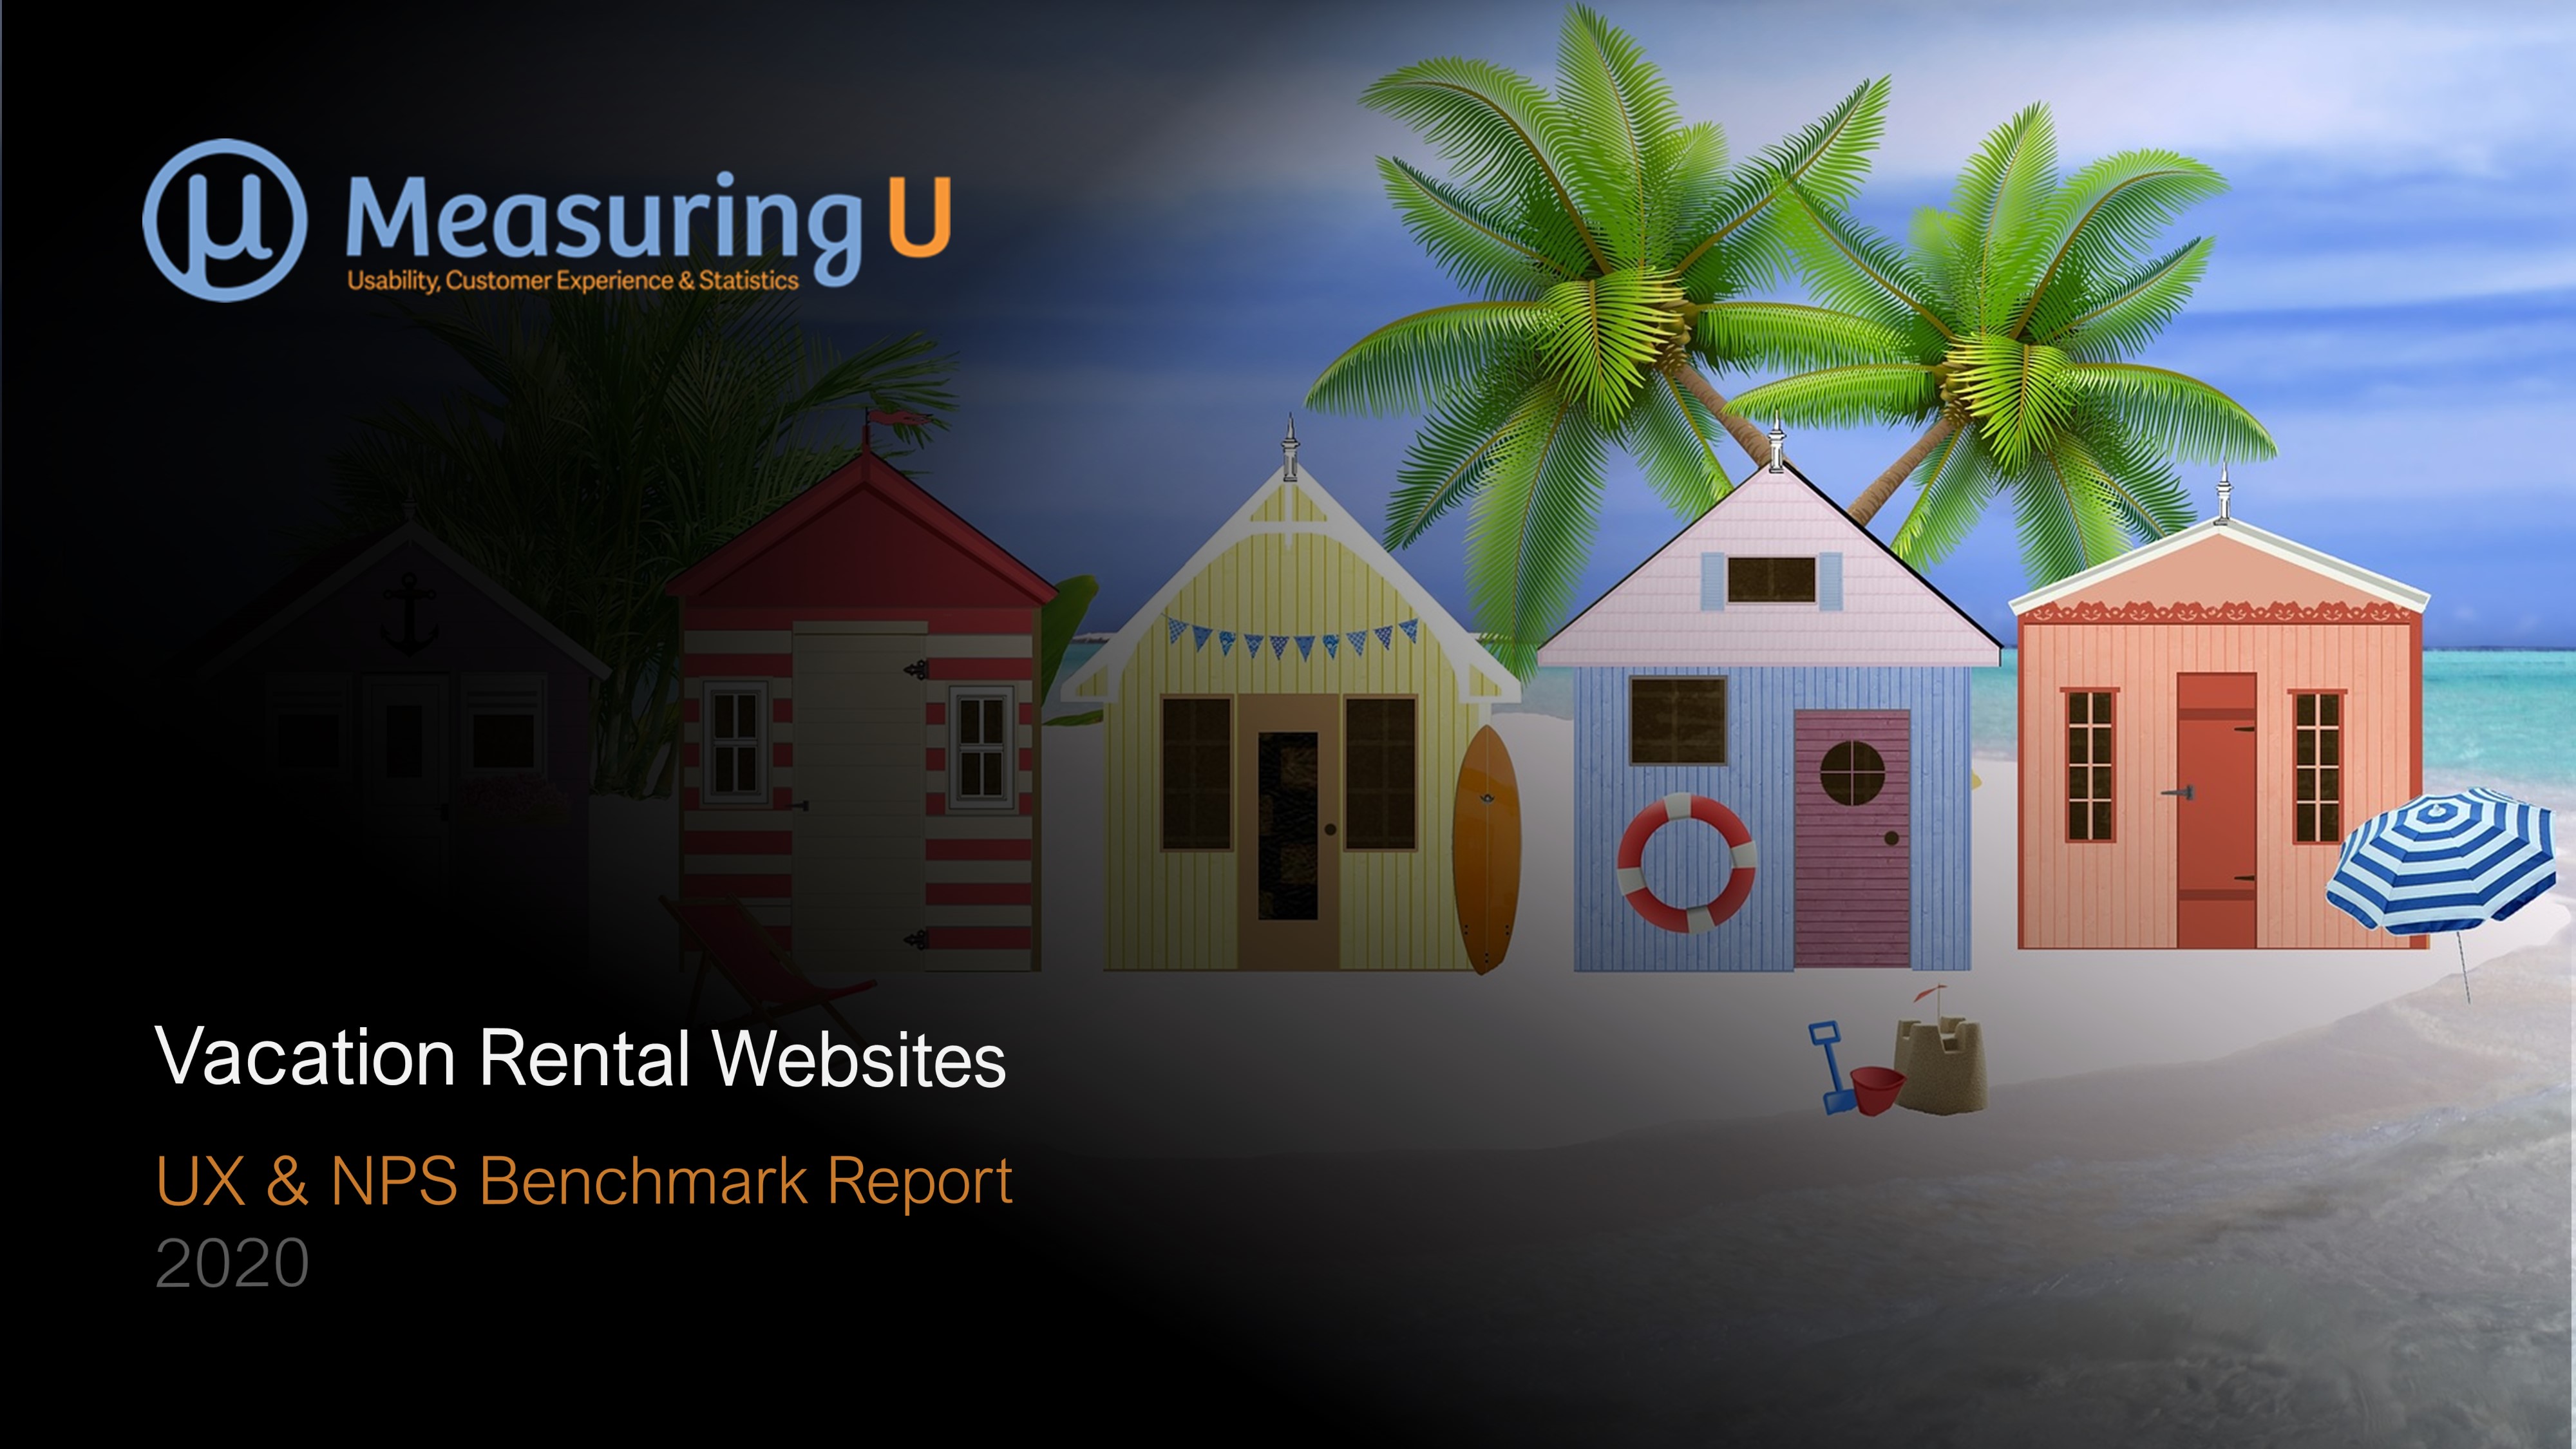 UX & NPS Benchmark Report for Vacation Rental Websites